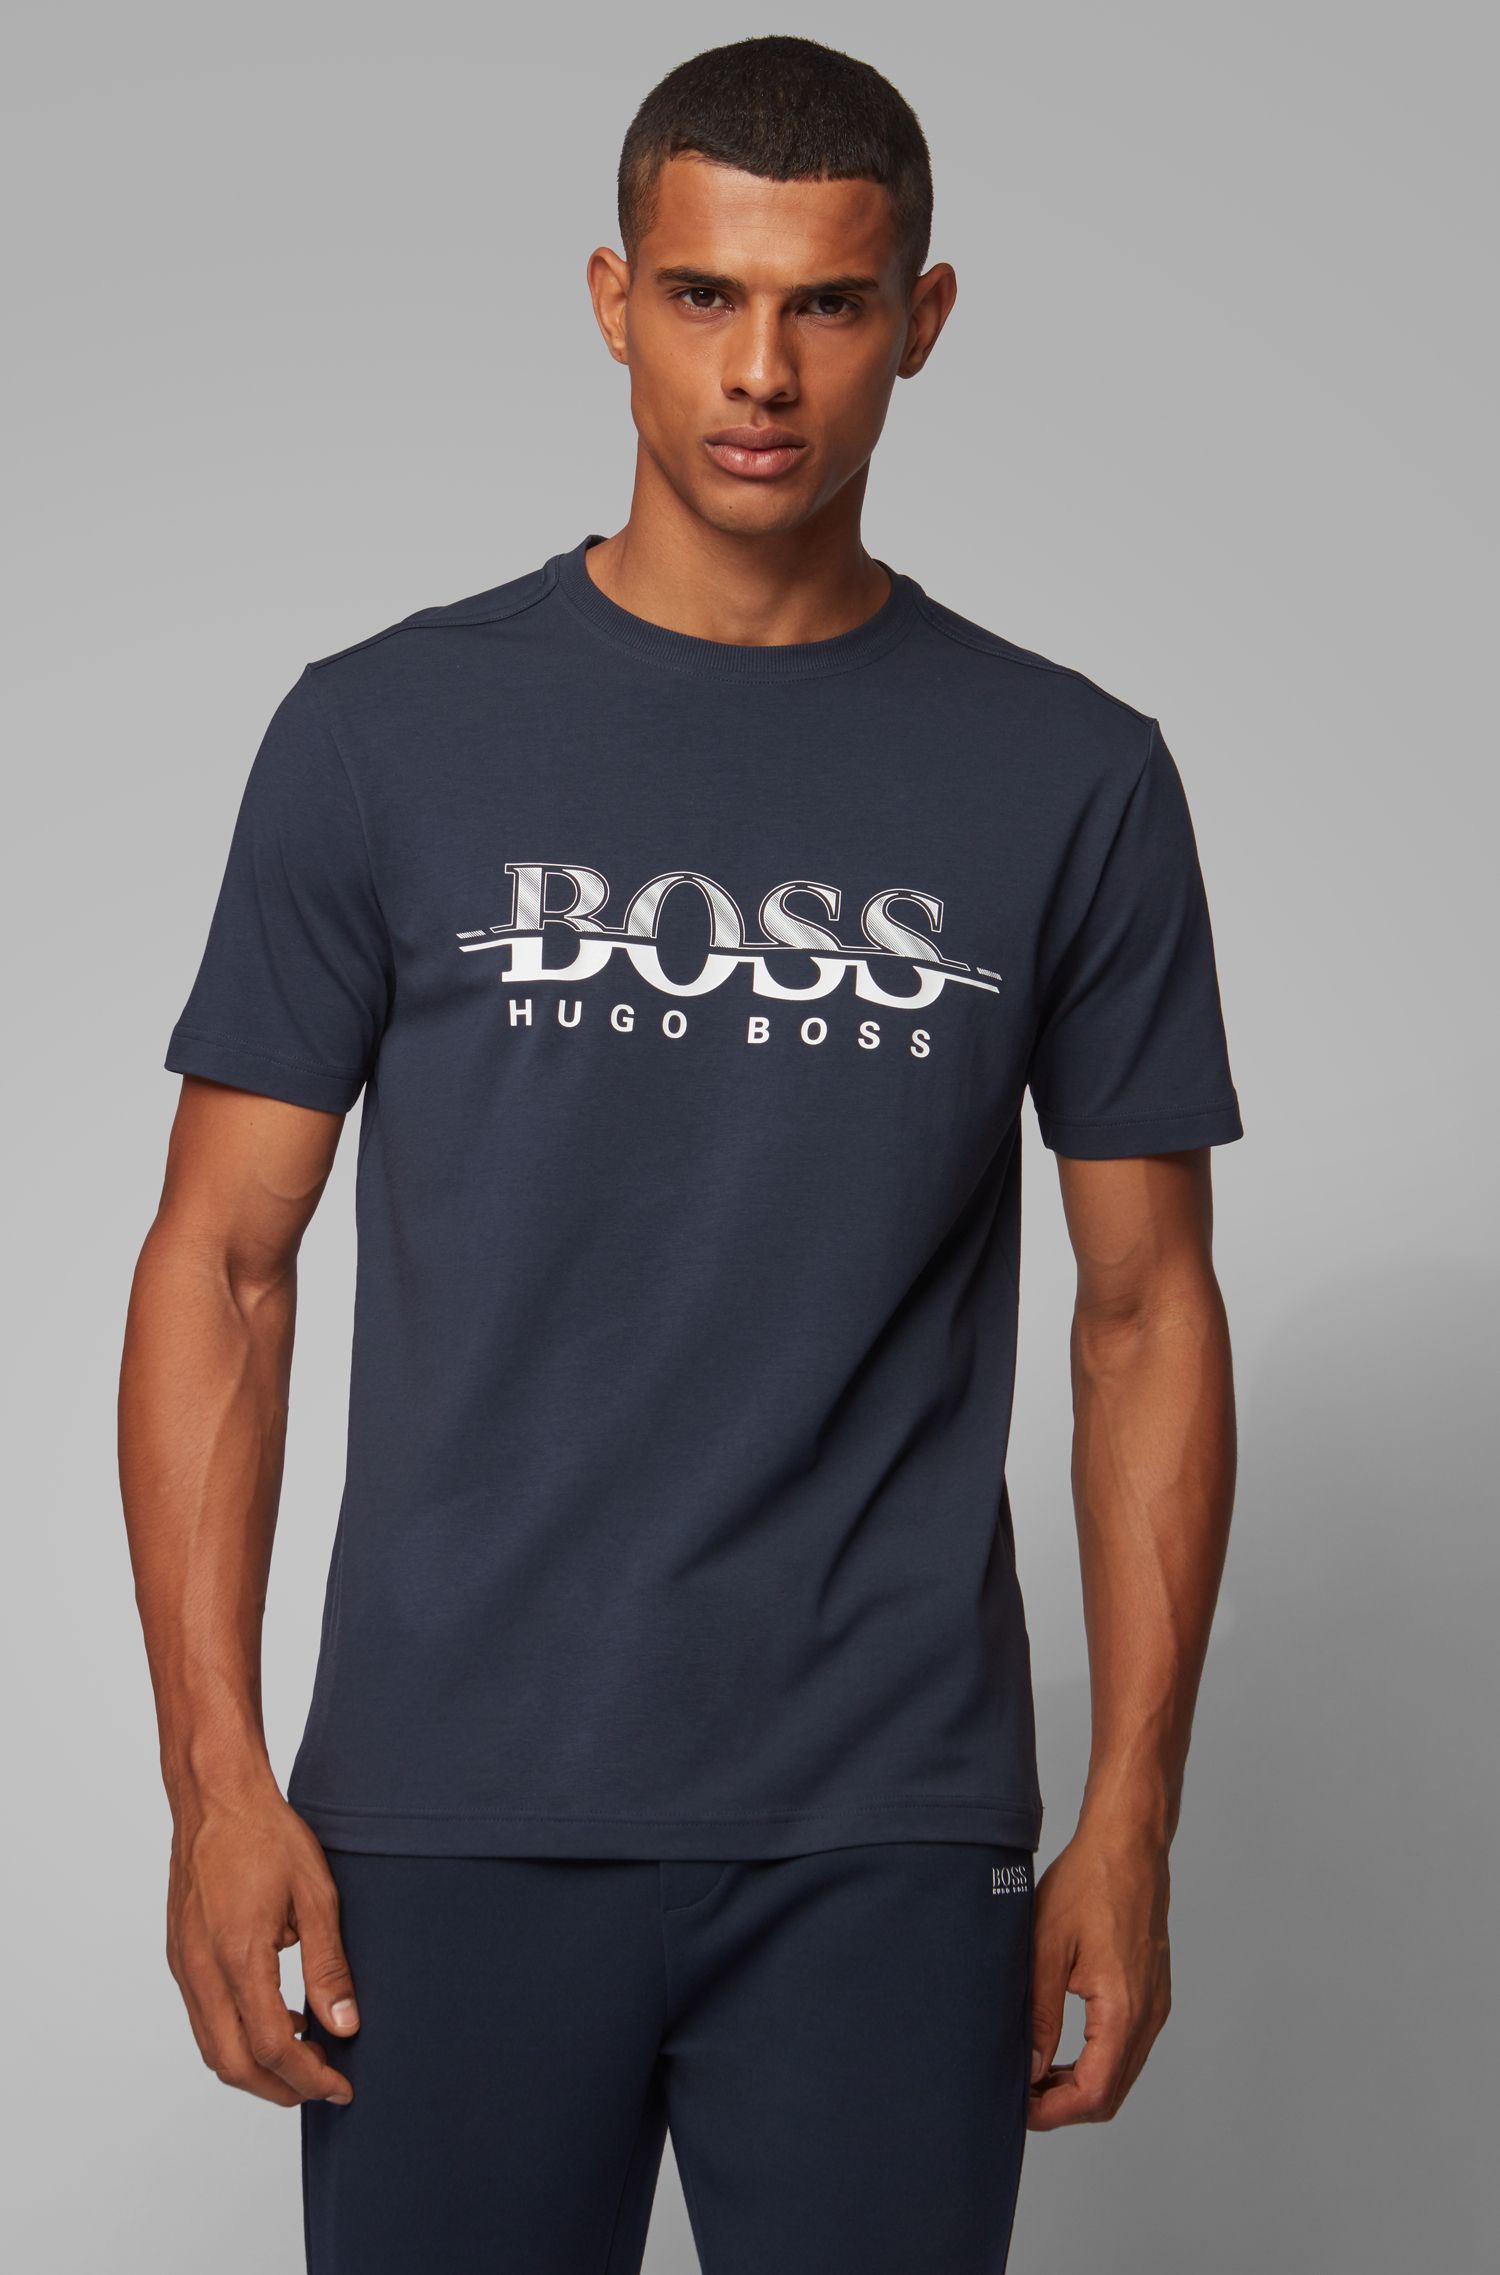 Hugo Boss tlogo Algodón Camiseta Azul Marino